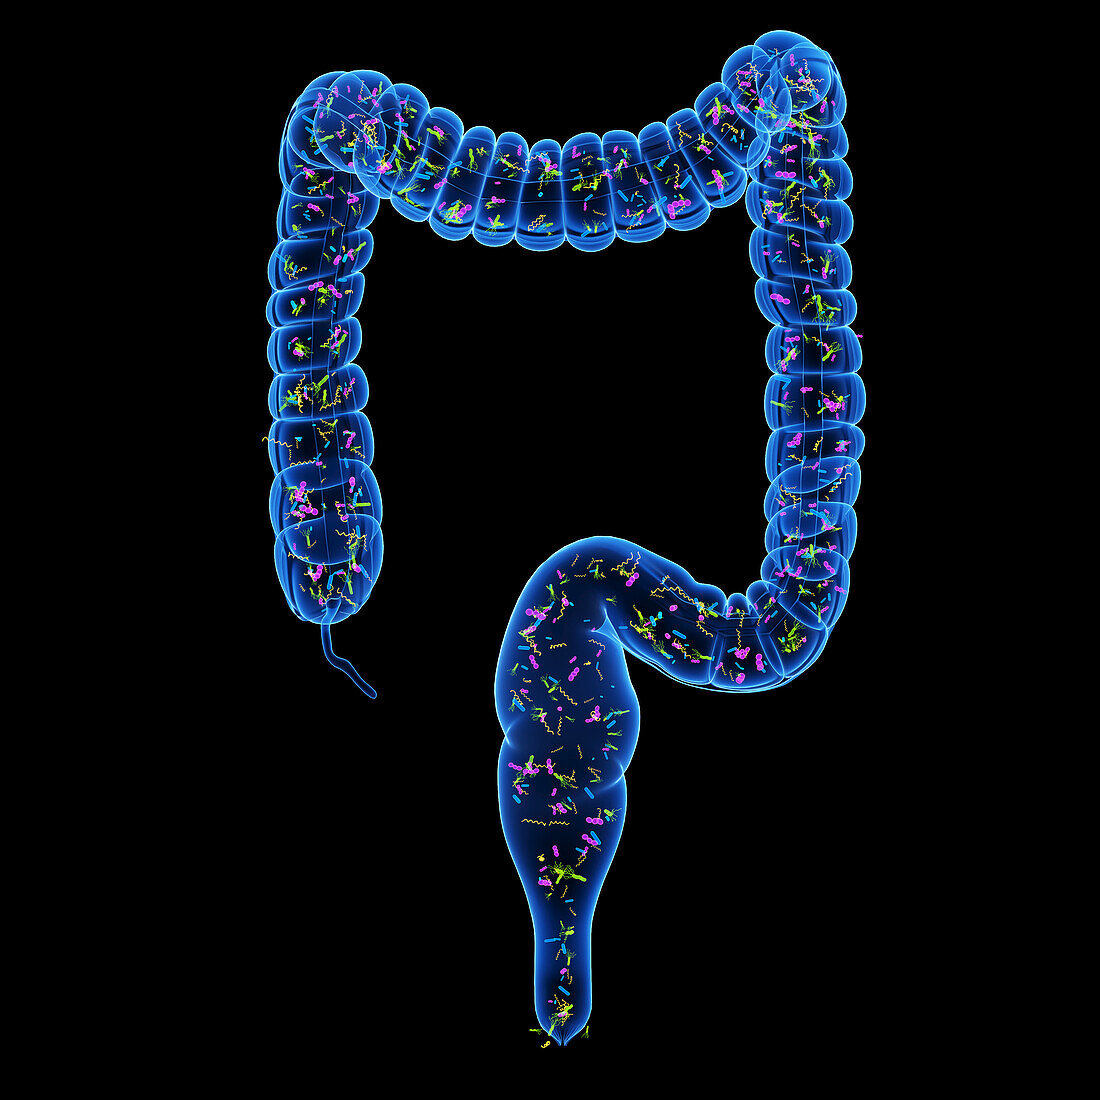 Microbiome, illustration